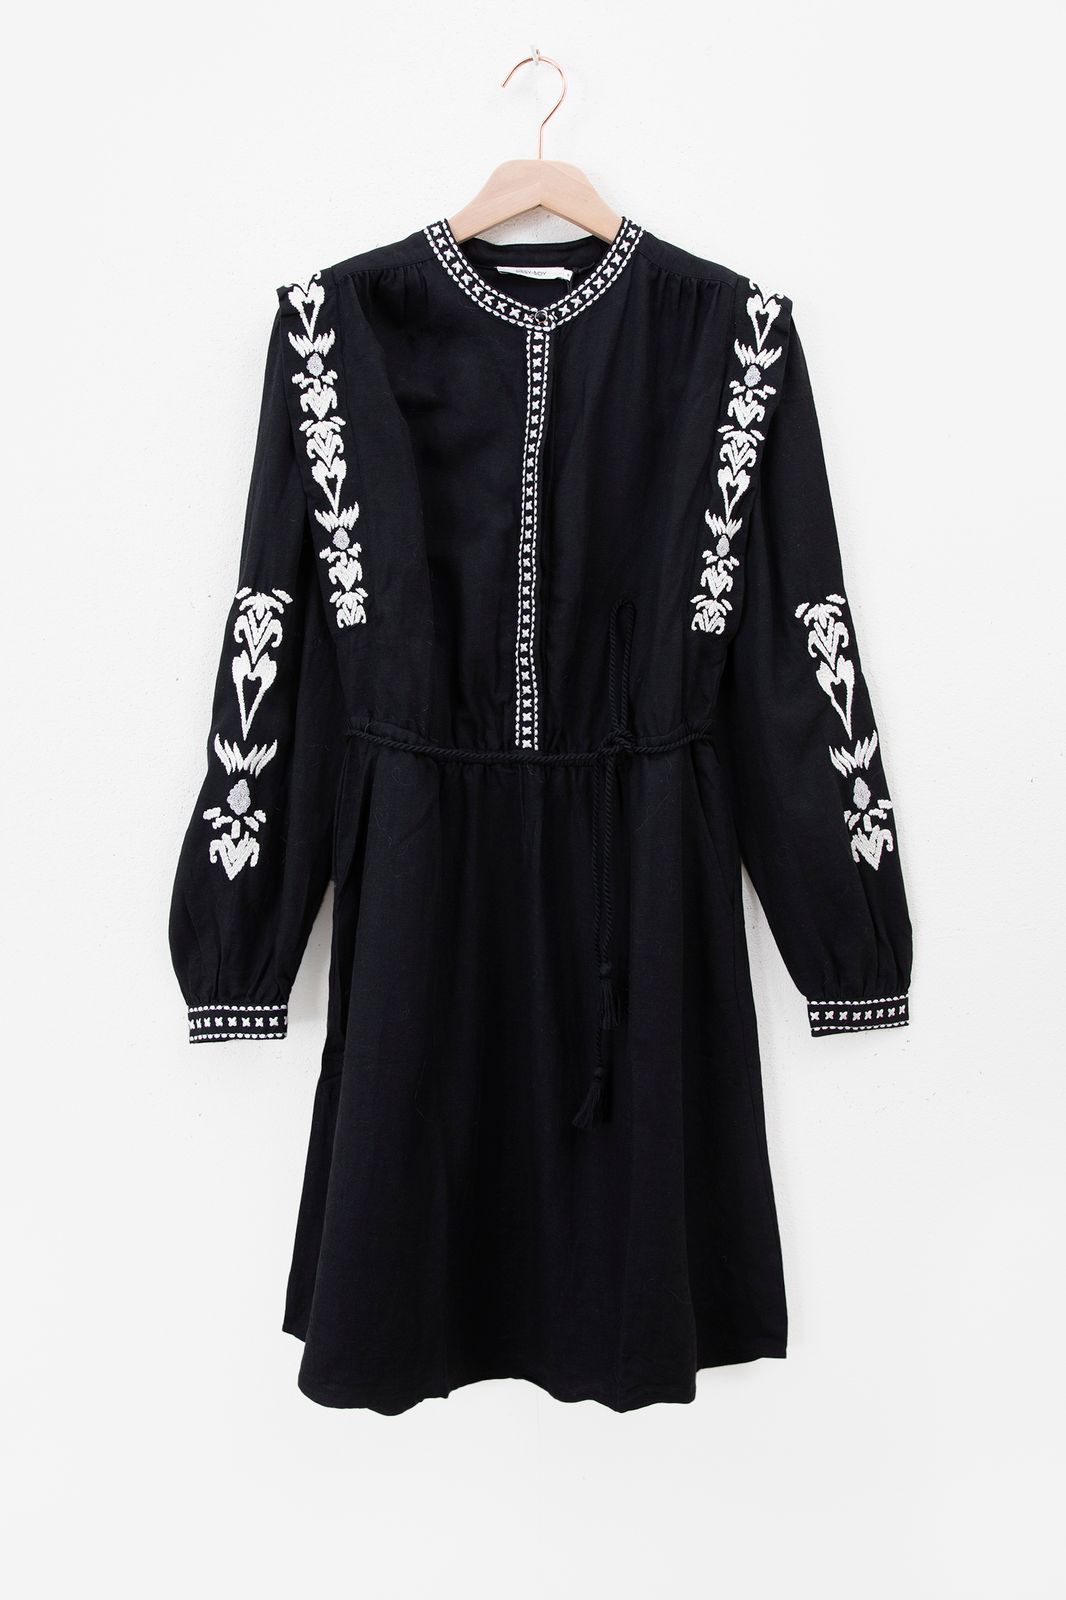 Zwarte jurk met embroidery details